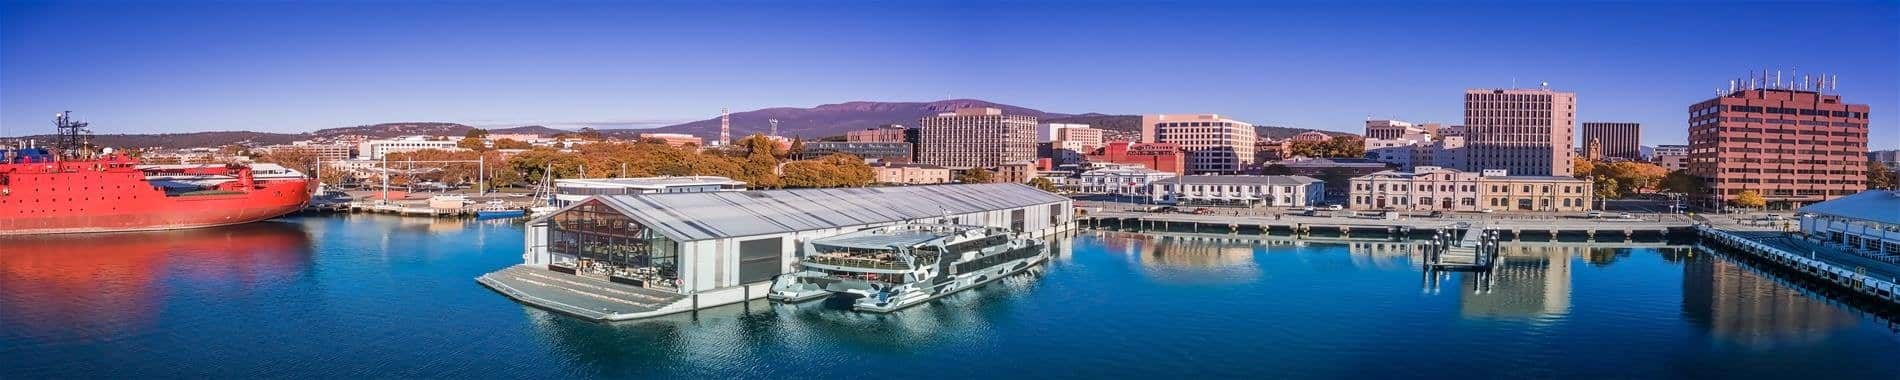 A panoramic view of Hobart, Tasmania